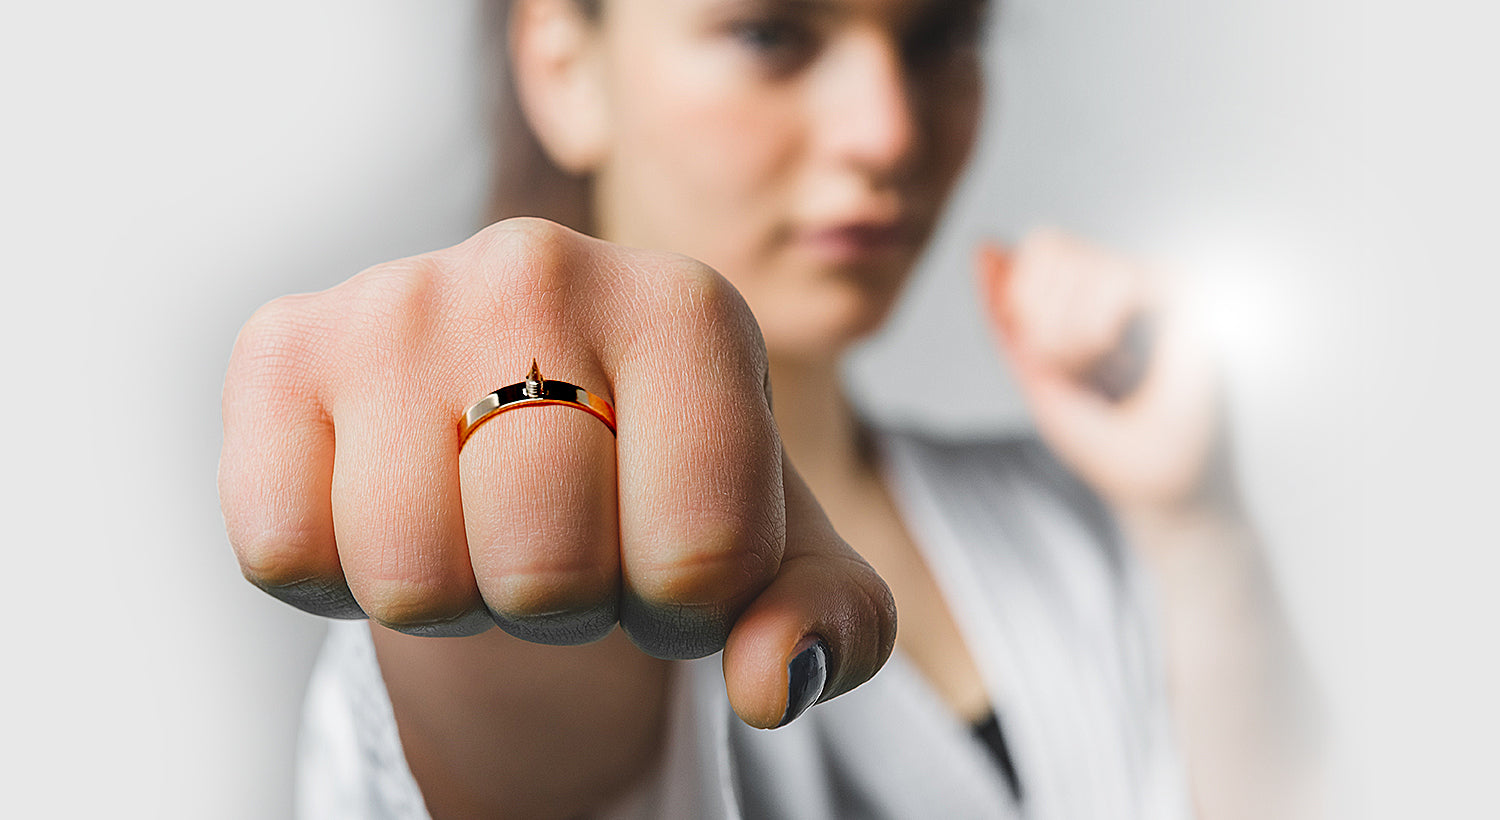 Safeguard Ring for Women Men Exquisite Cat Ears Ring 